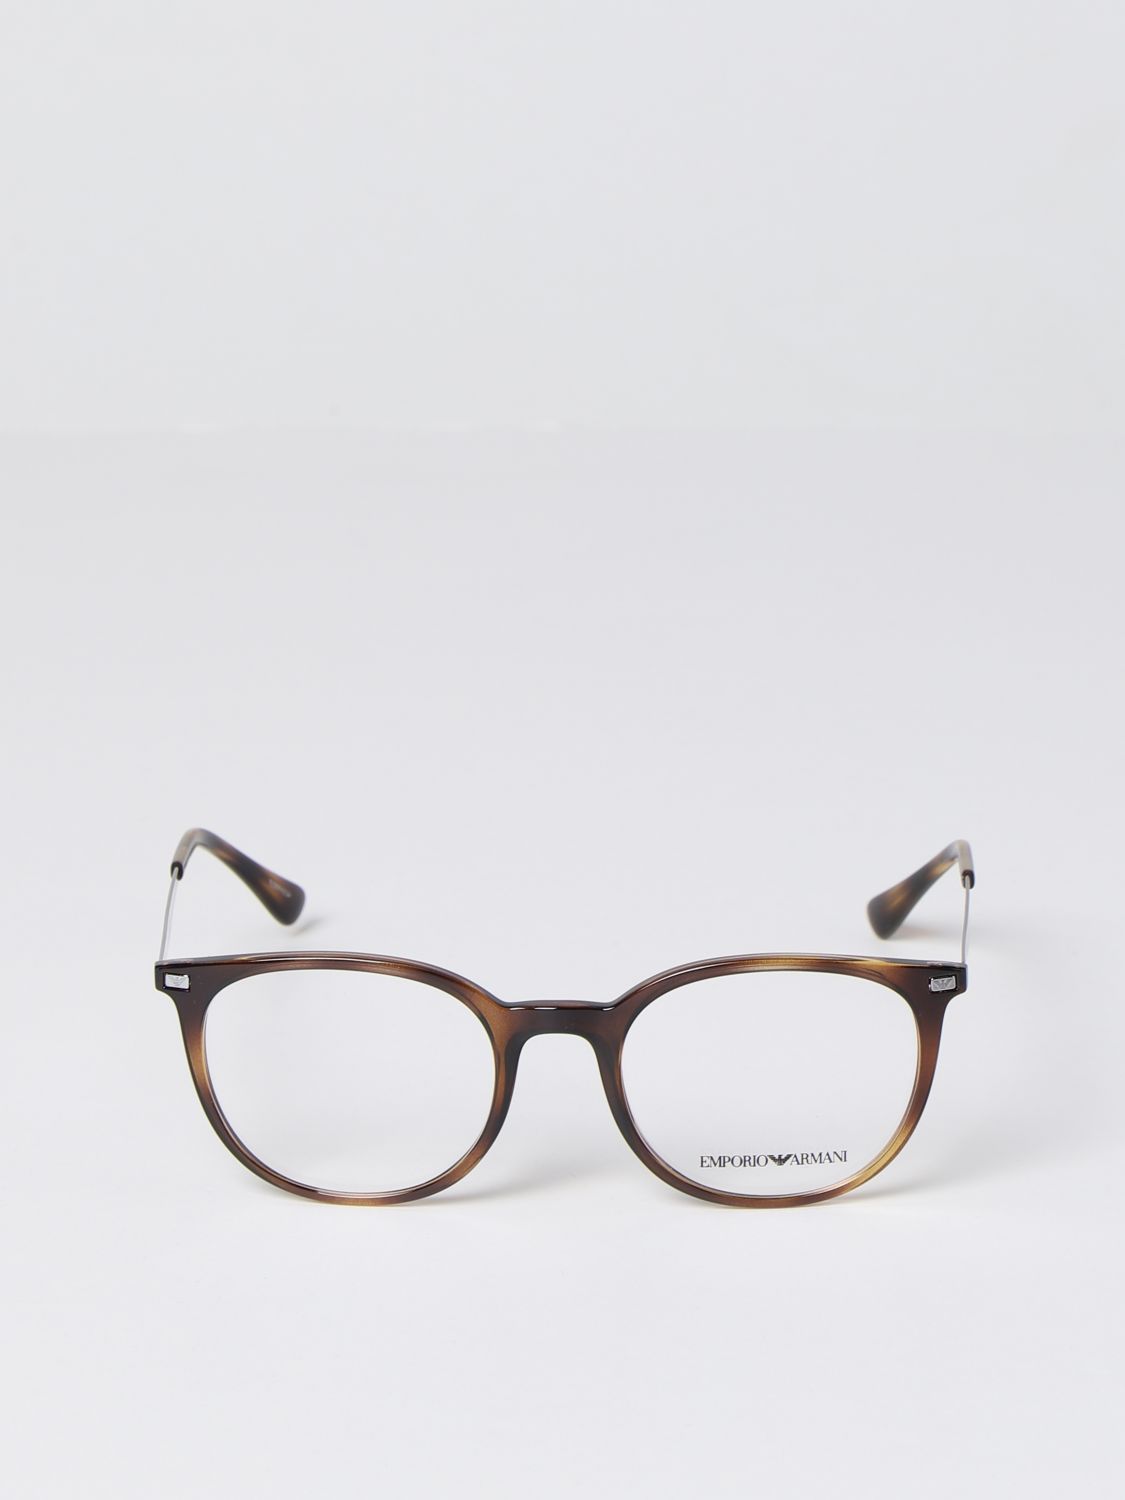 Glasses Emporio Armani: Emporio Armani eyeglasses in tortoiseshell acetate brown 2